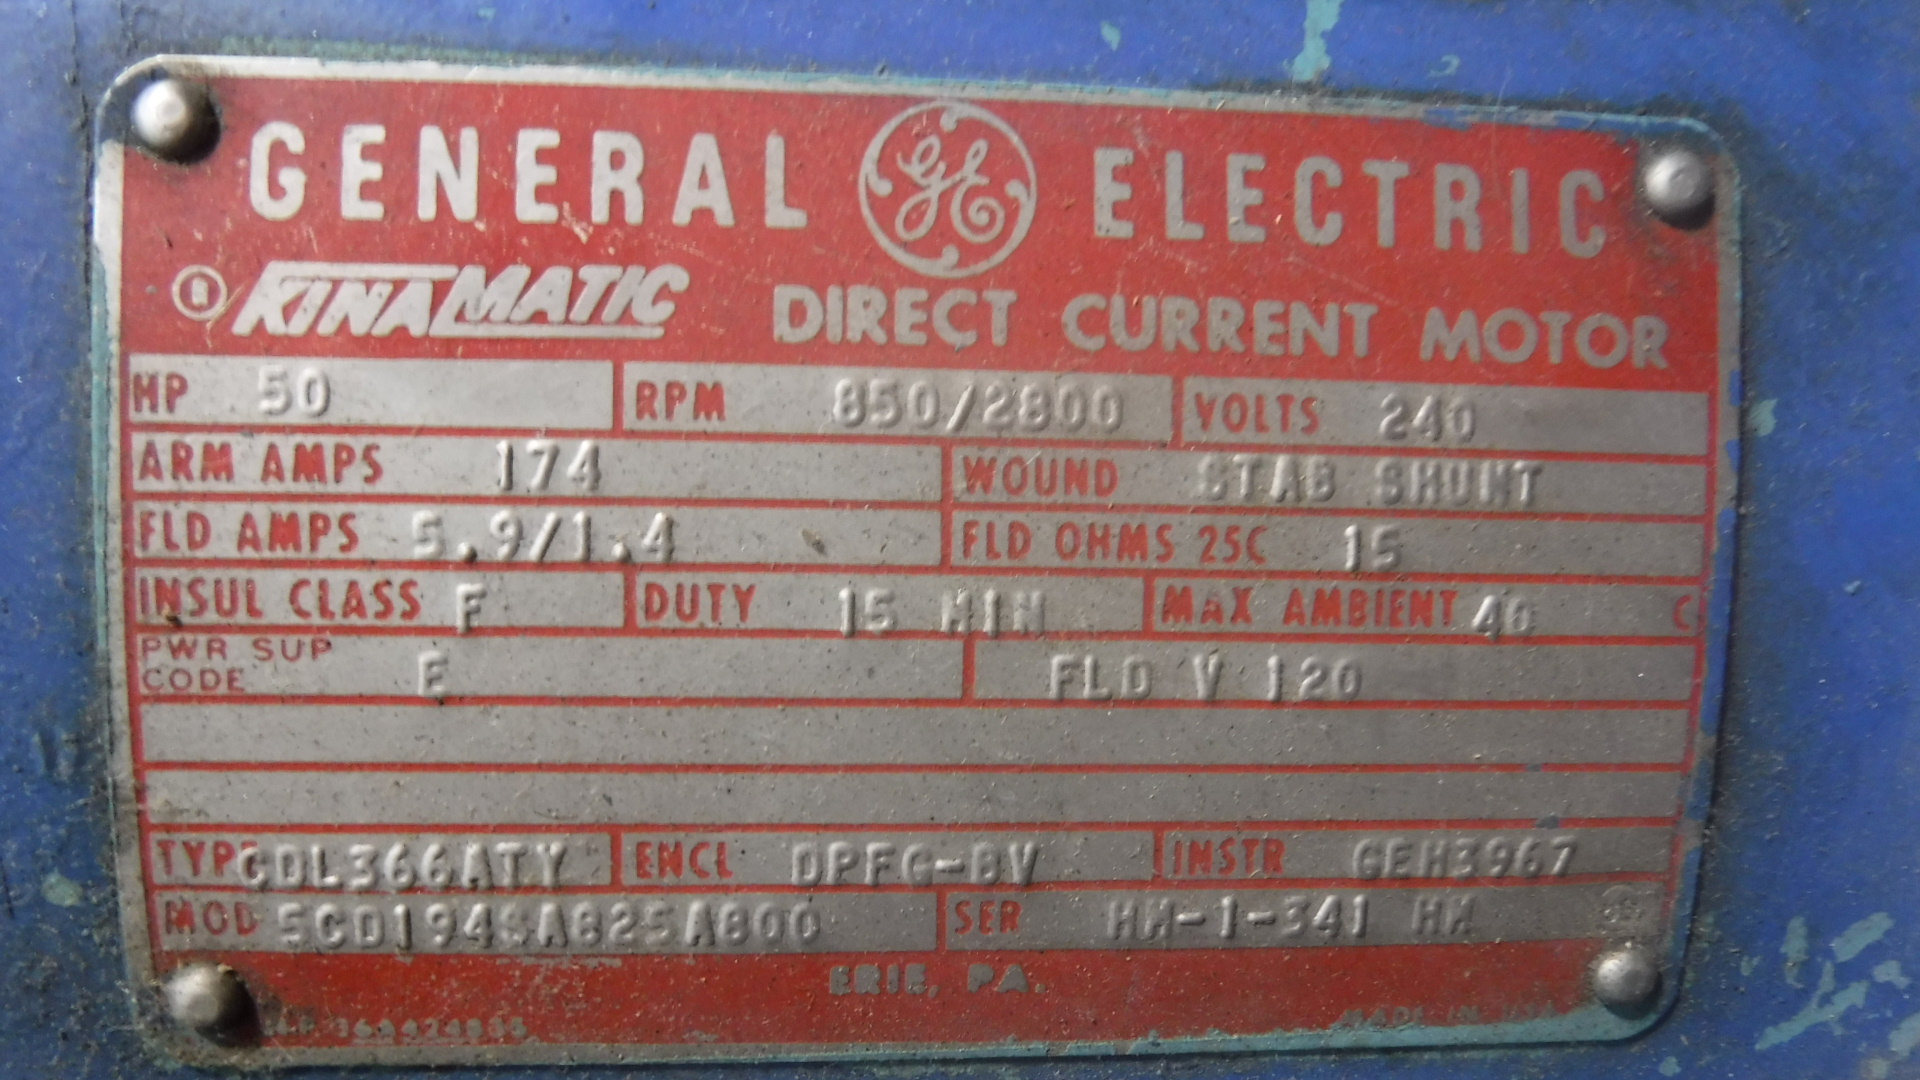 General Electric 50 HP 850/2800 RPM 366ATY DC Motors 83465